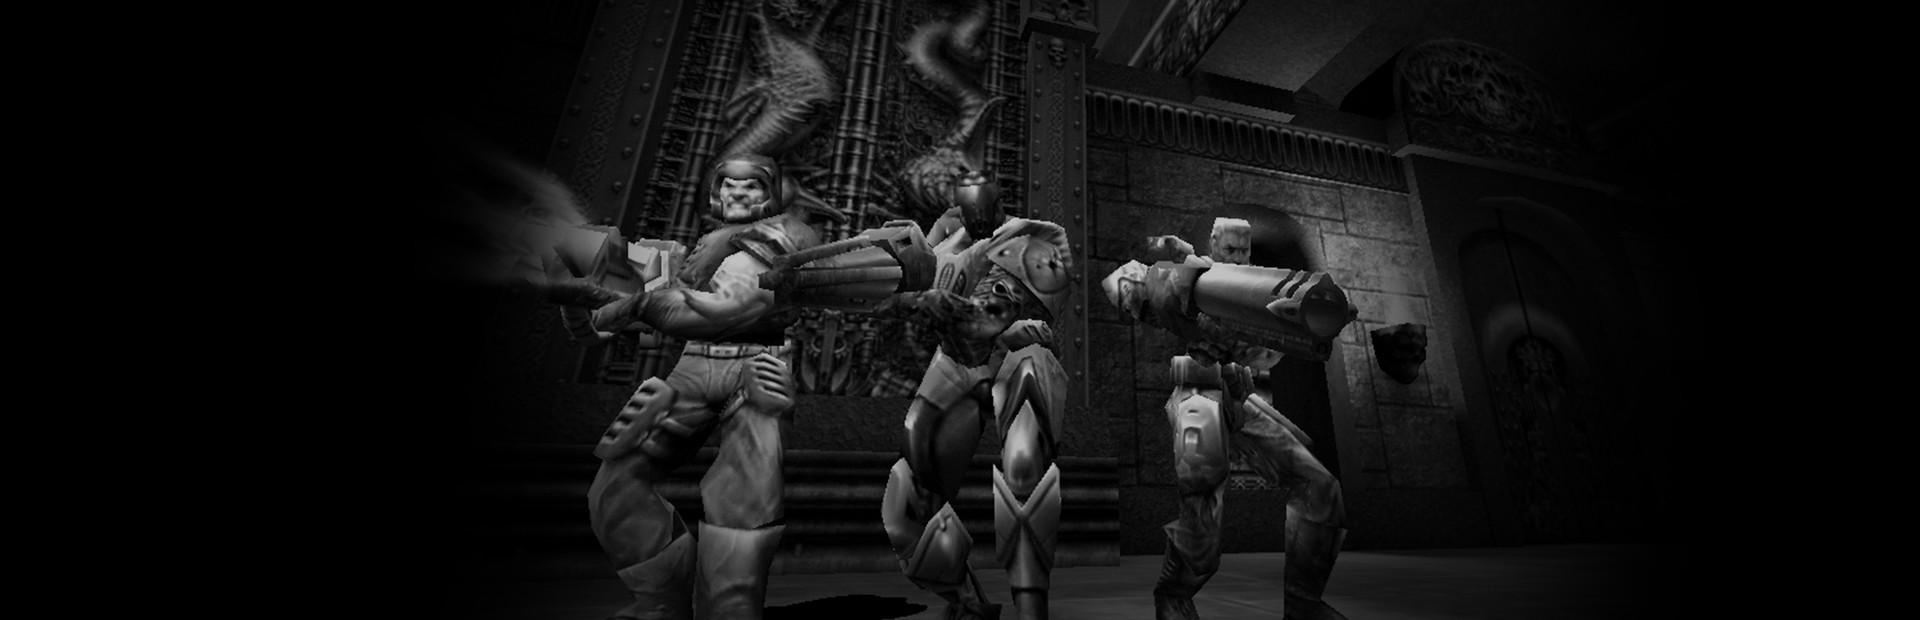 Quake III Arena cover image